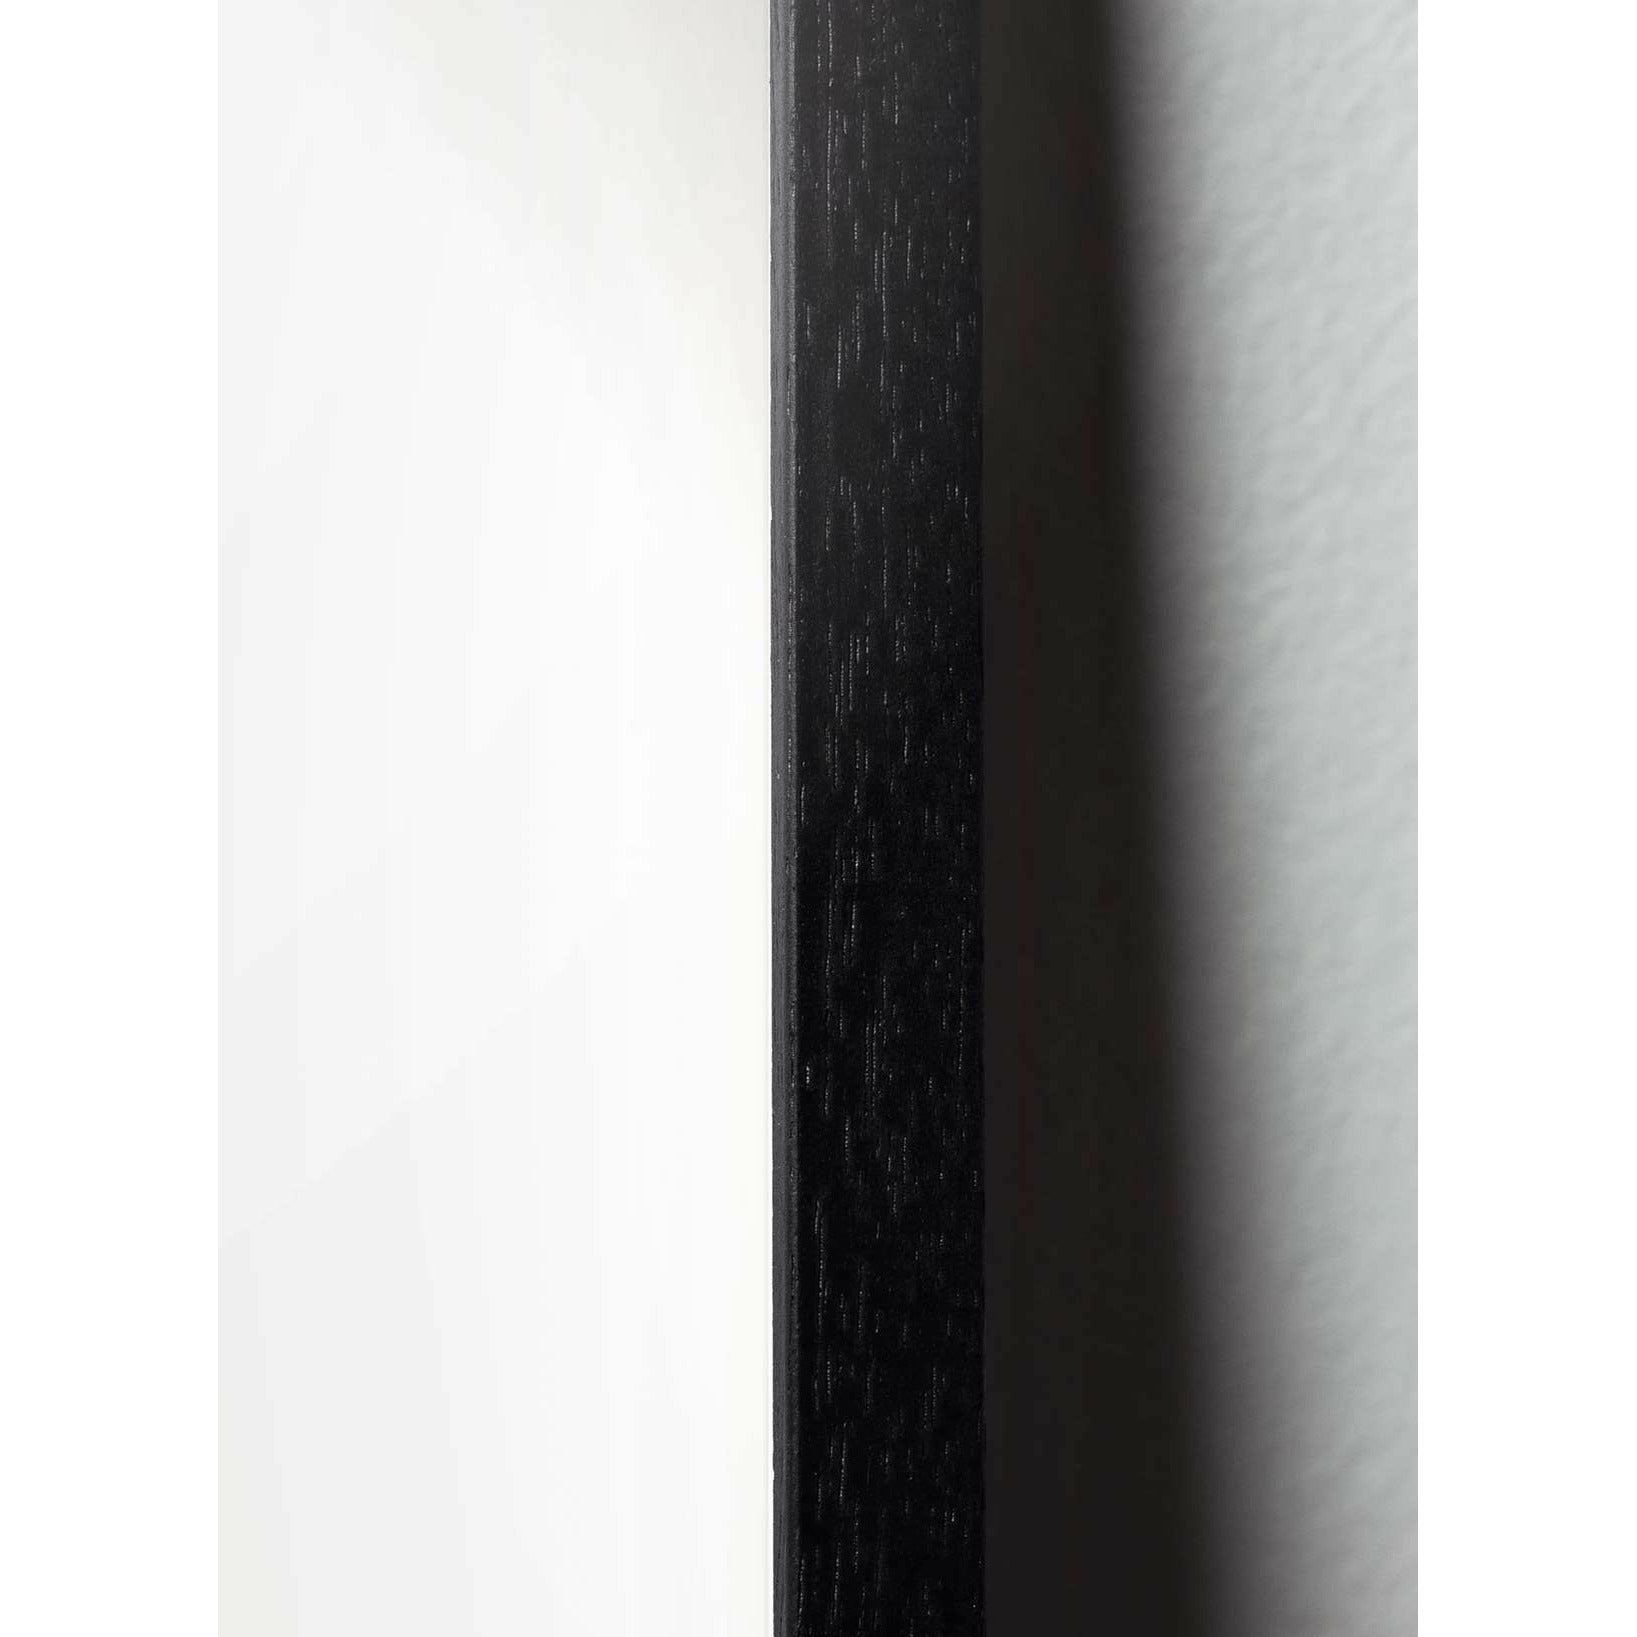 Brainchild Teddy Bear Line Poster, Frame In Black Lacquered Wood 70x100 Cm, White Background